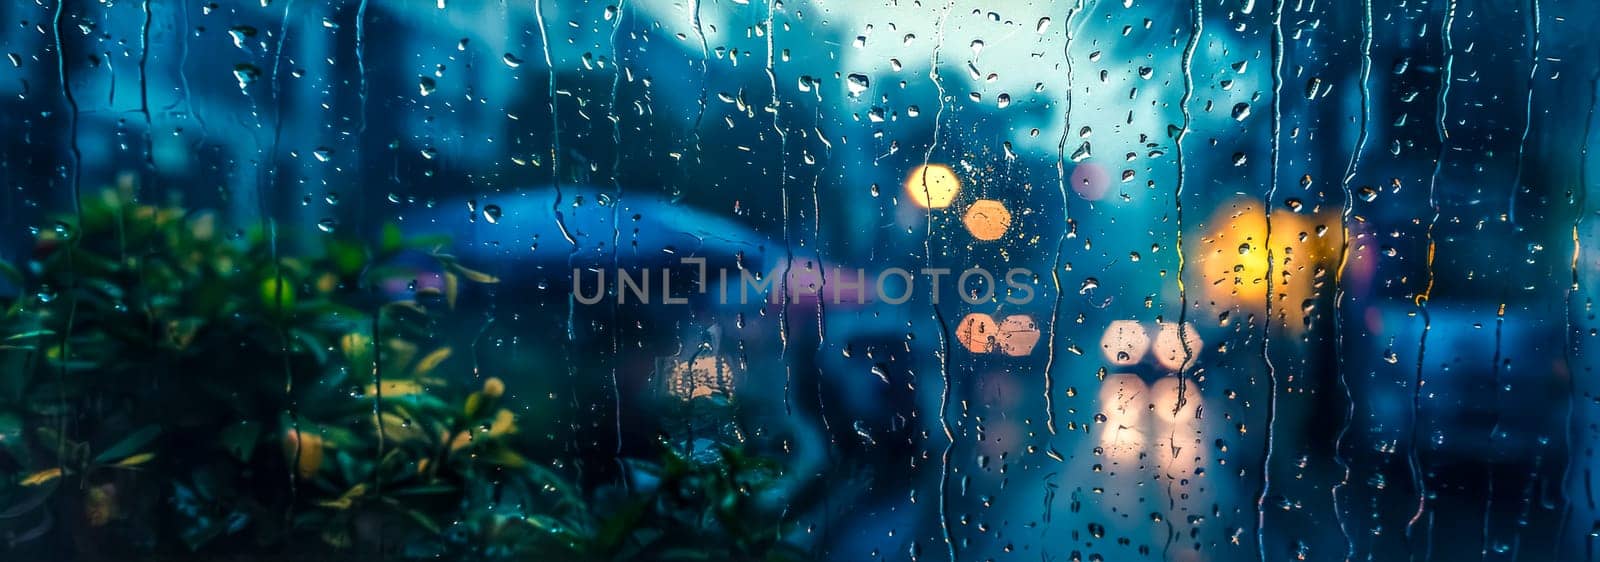 Rainy window with blurred city lights by Edophoto